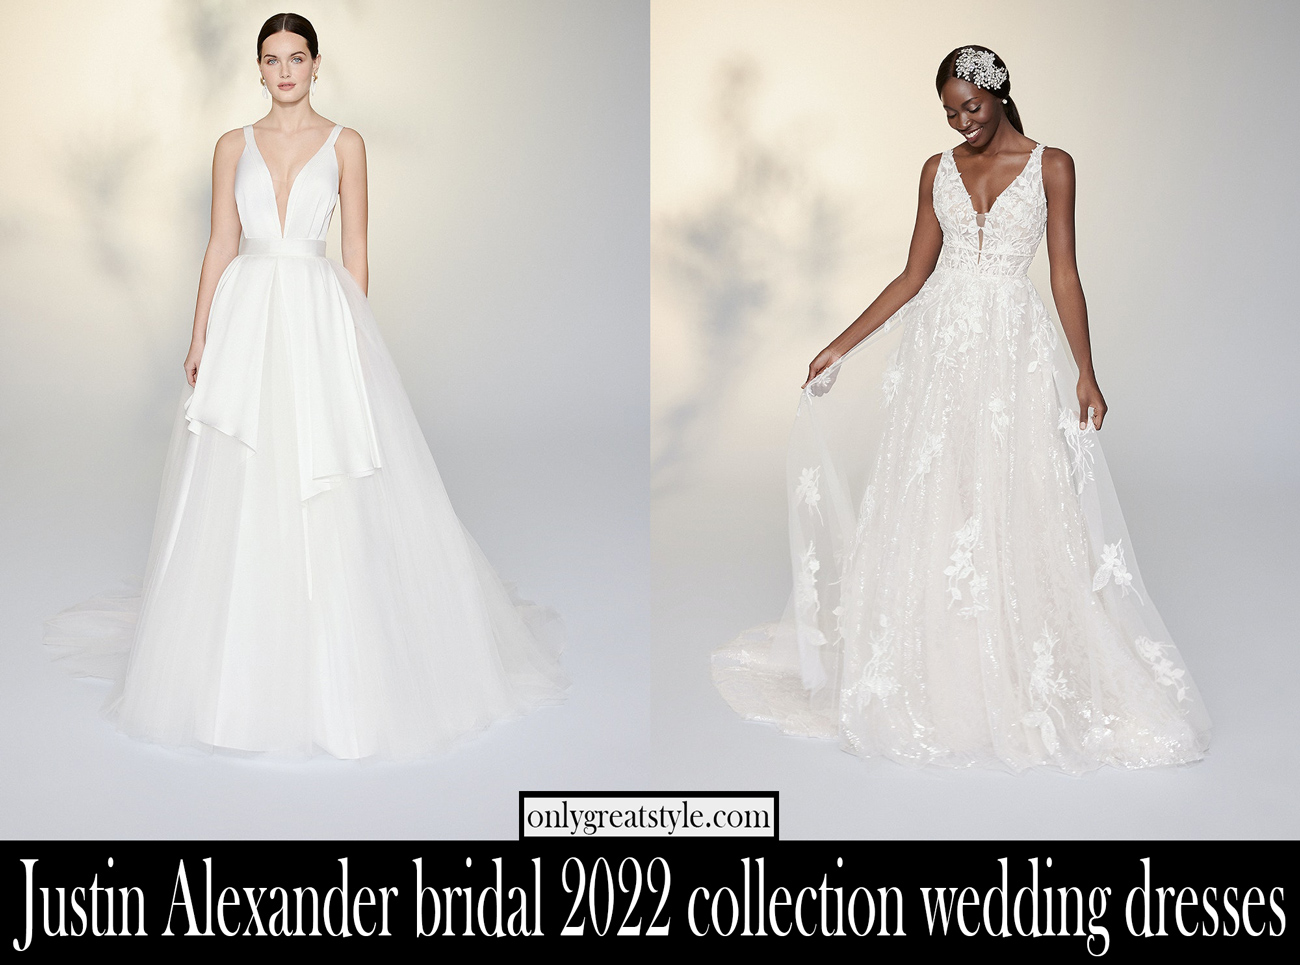 Justin Alexander bridal 2022 collection wedding dresses